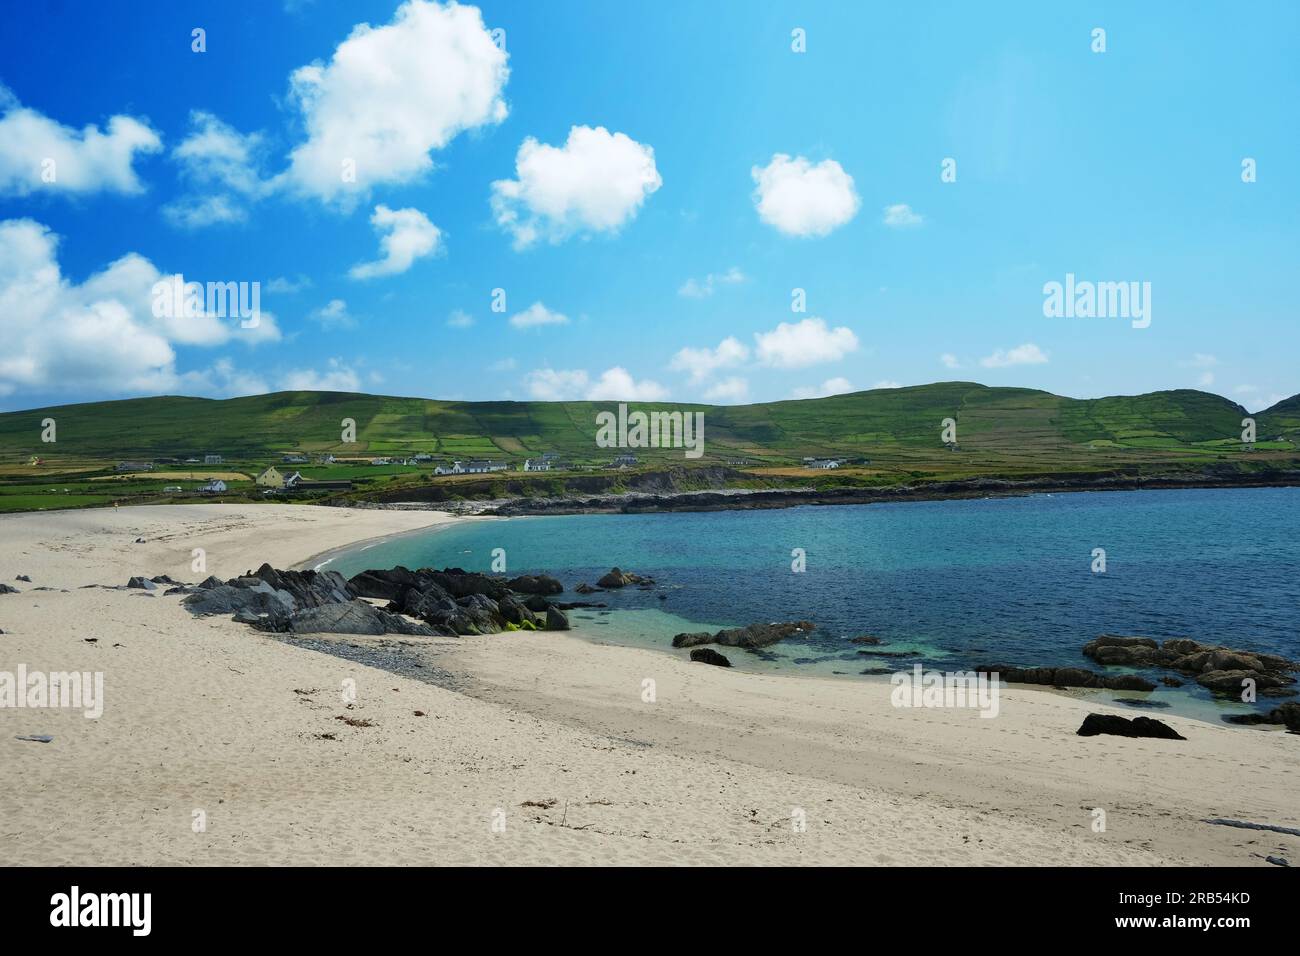 The beach at Ballydonegan, Allihies, County Cork, Ireland - John Gollop Stock Photo